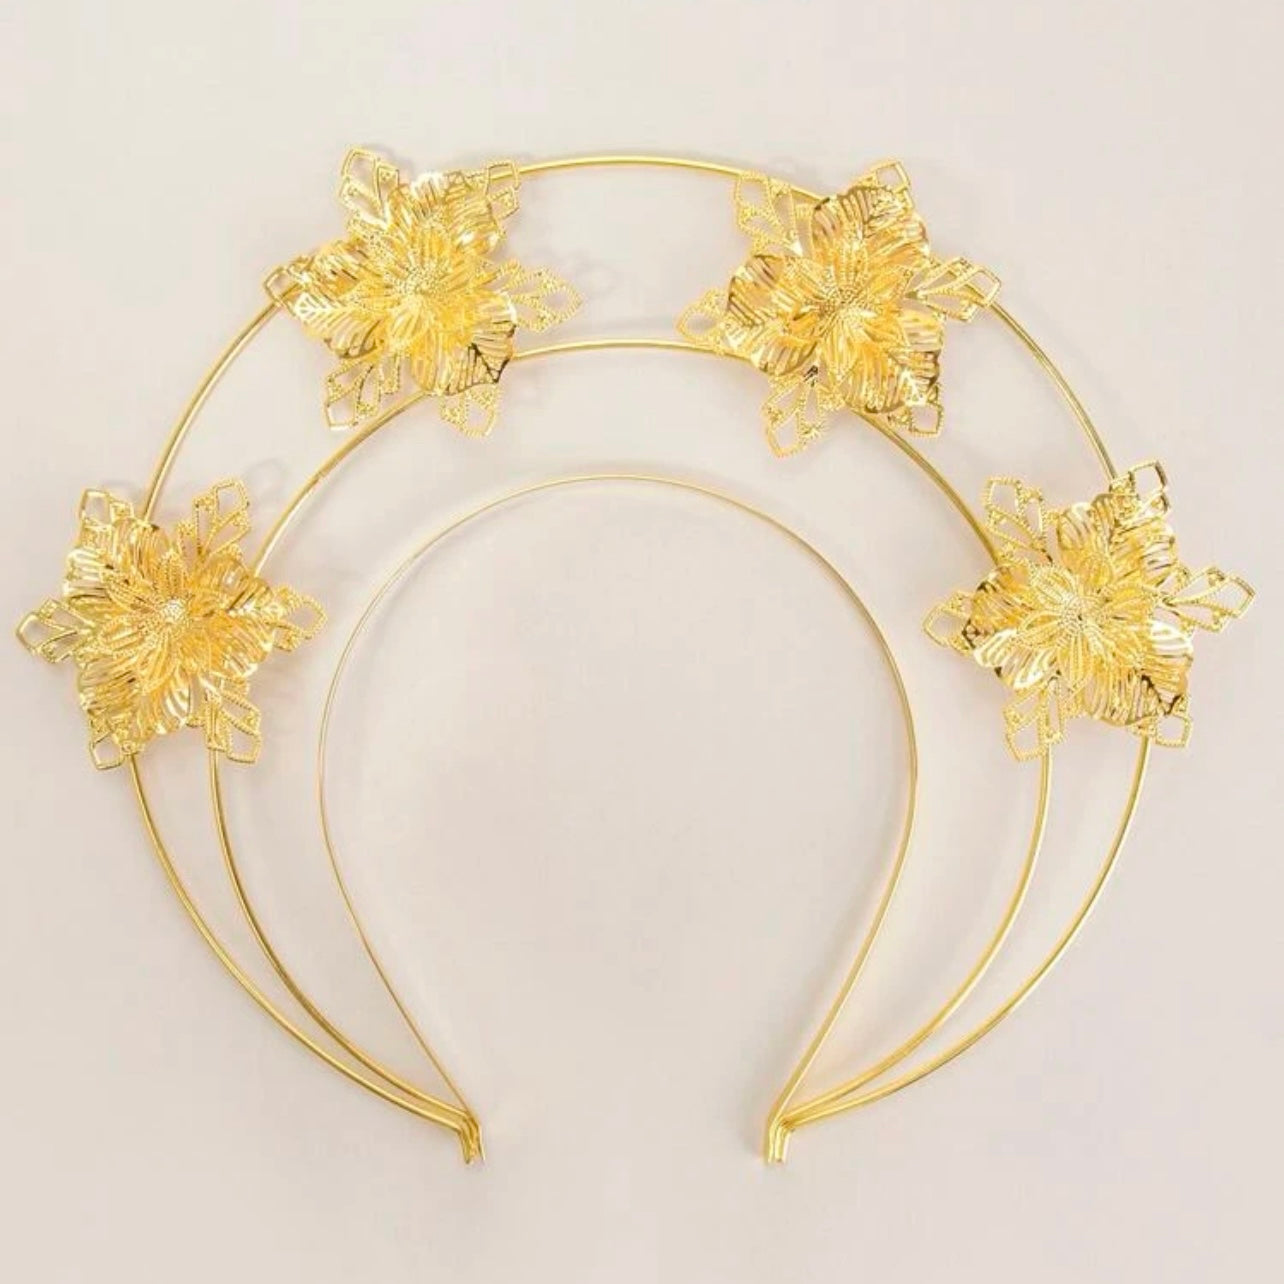 Gold Goddess Headband - Gold Star Headband, Celestial Headpiece, Goddess Headpiece, Birthday Party, Star Goddess